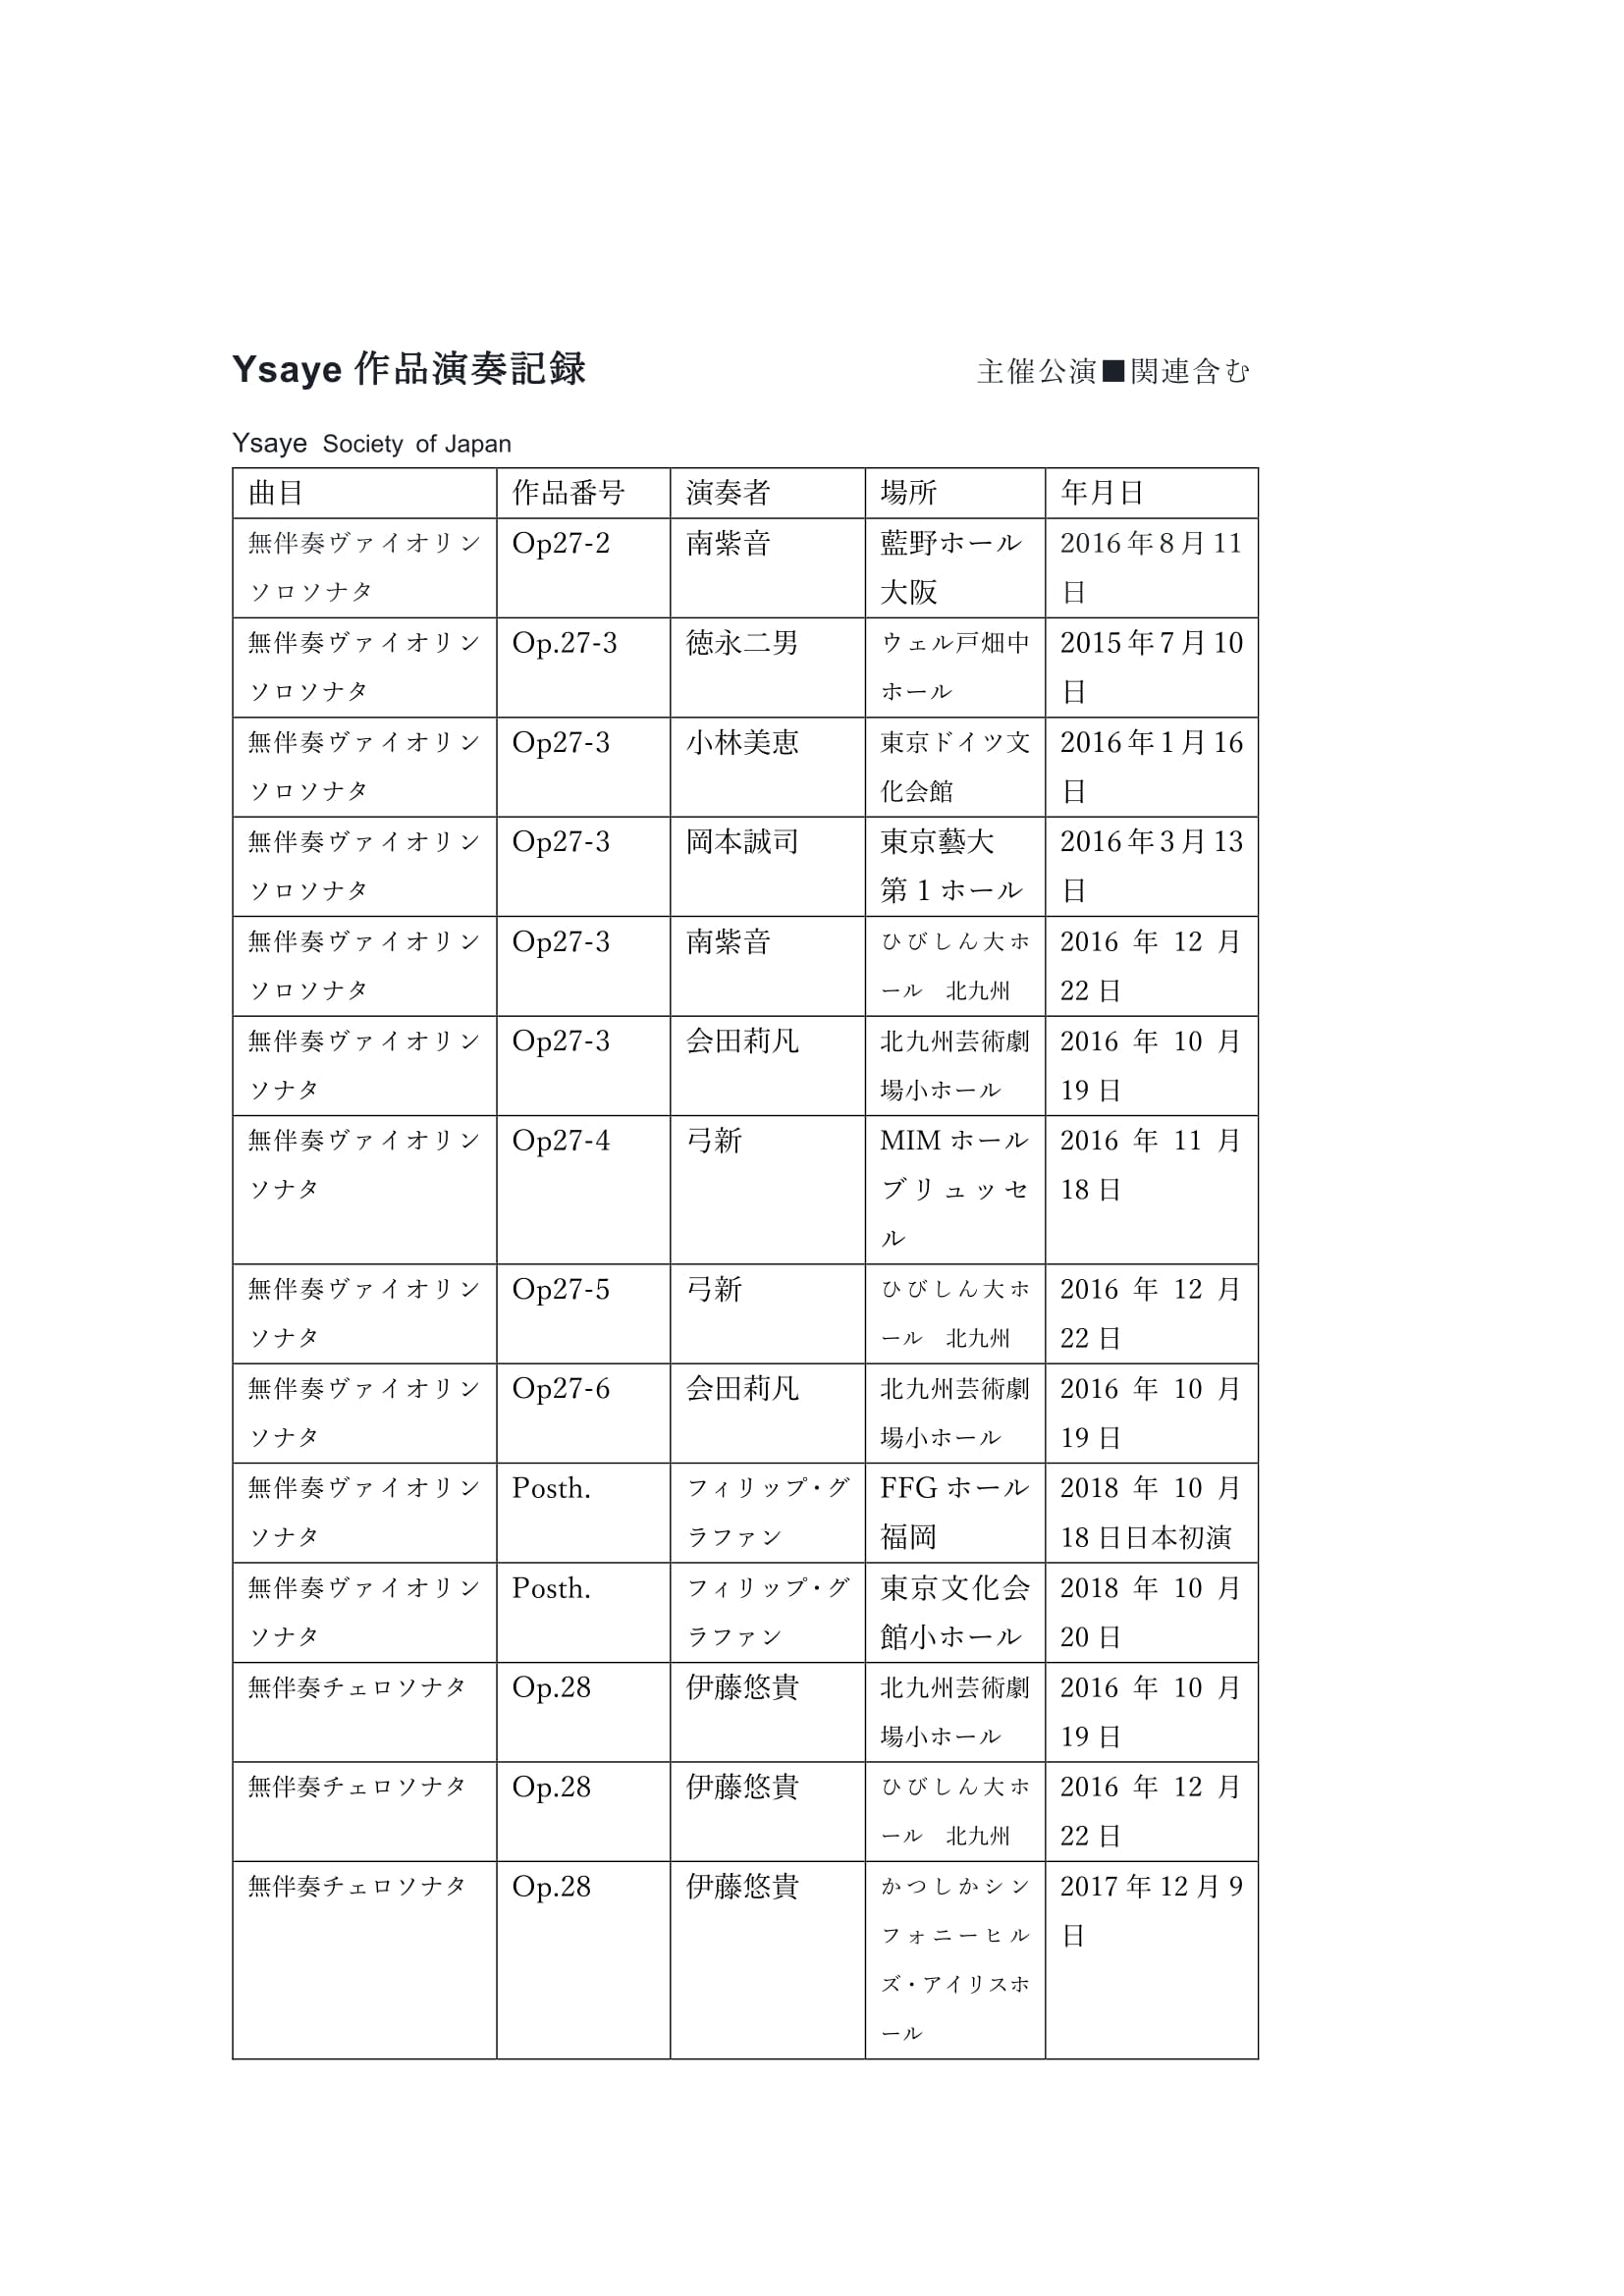 Table of Repertoire de 2016 Ysaye Society of Japan WORD-1